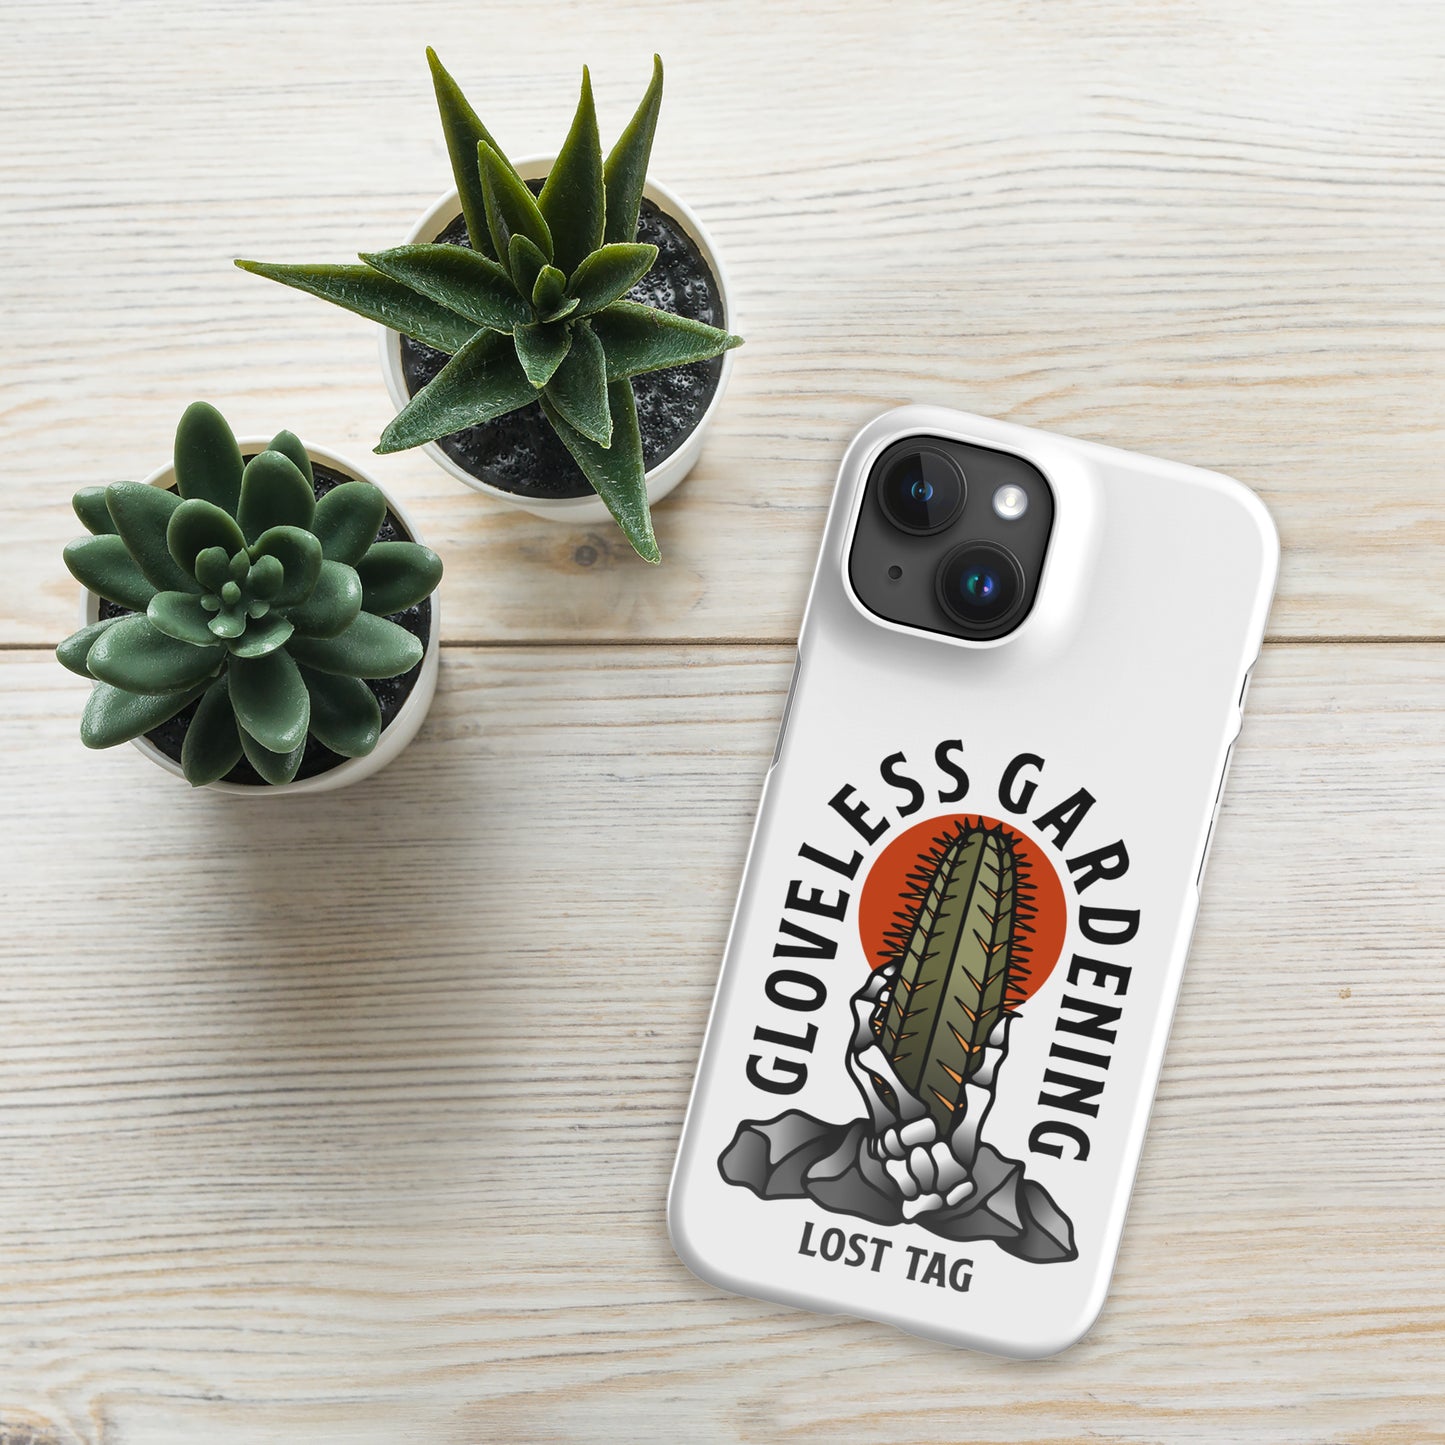 Gloveless Gardening snap case for iPhone®